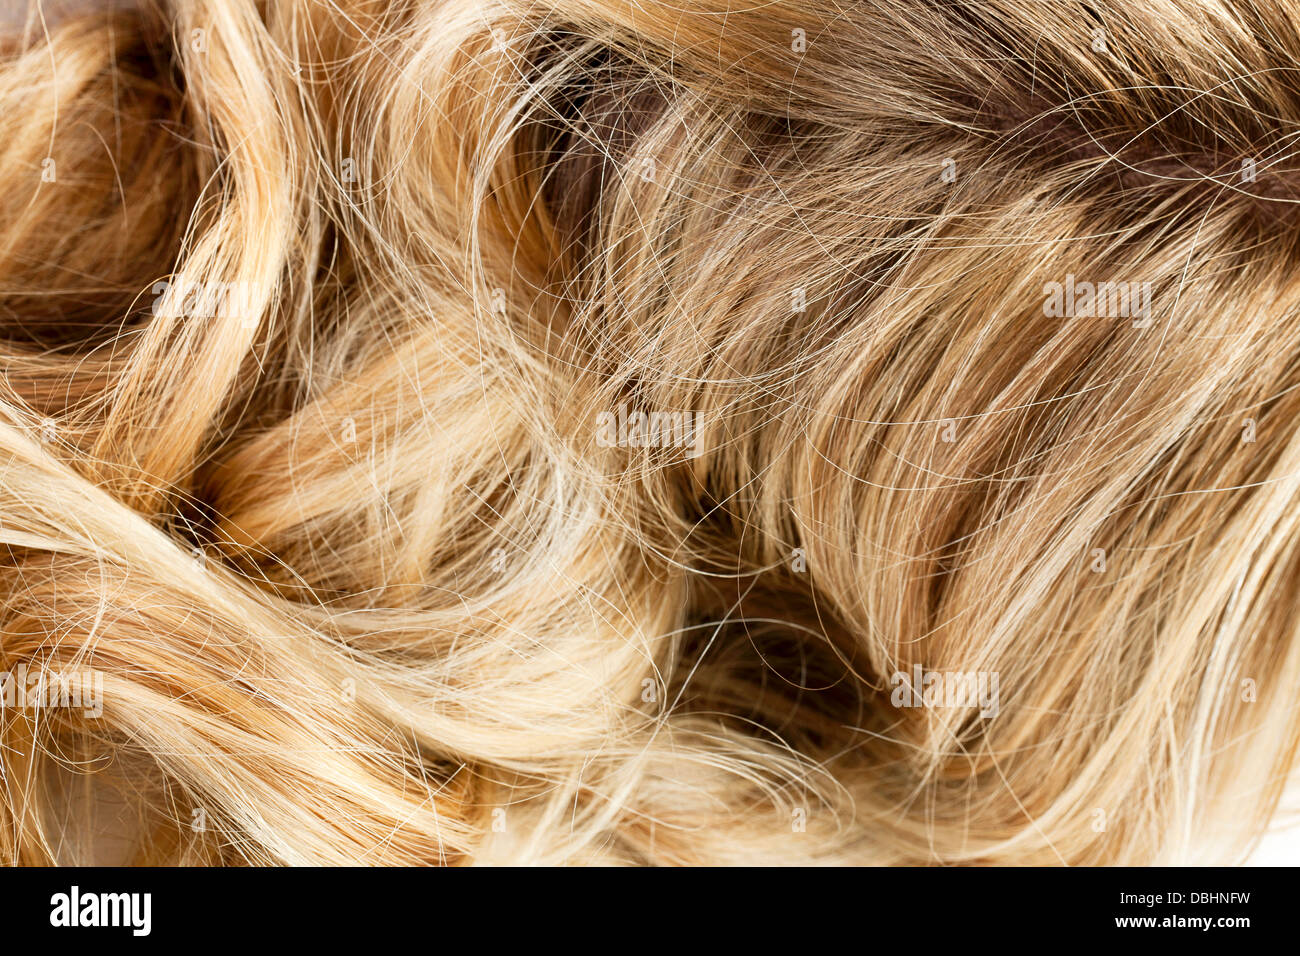 10. Honey blonde wavy hair with curls - wide 8